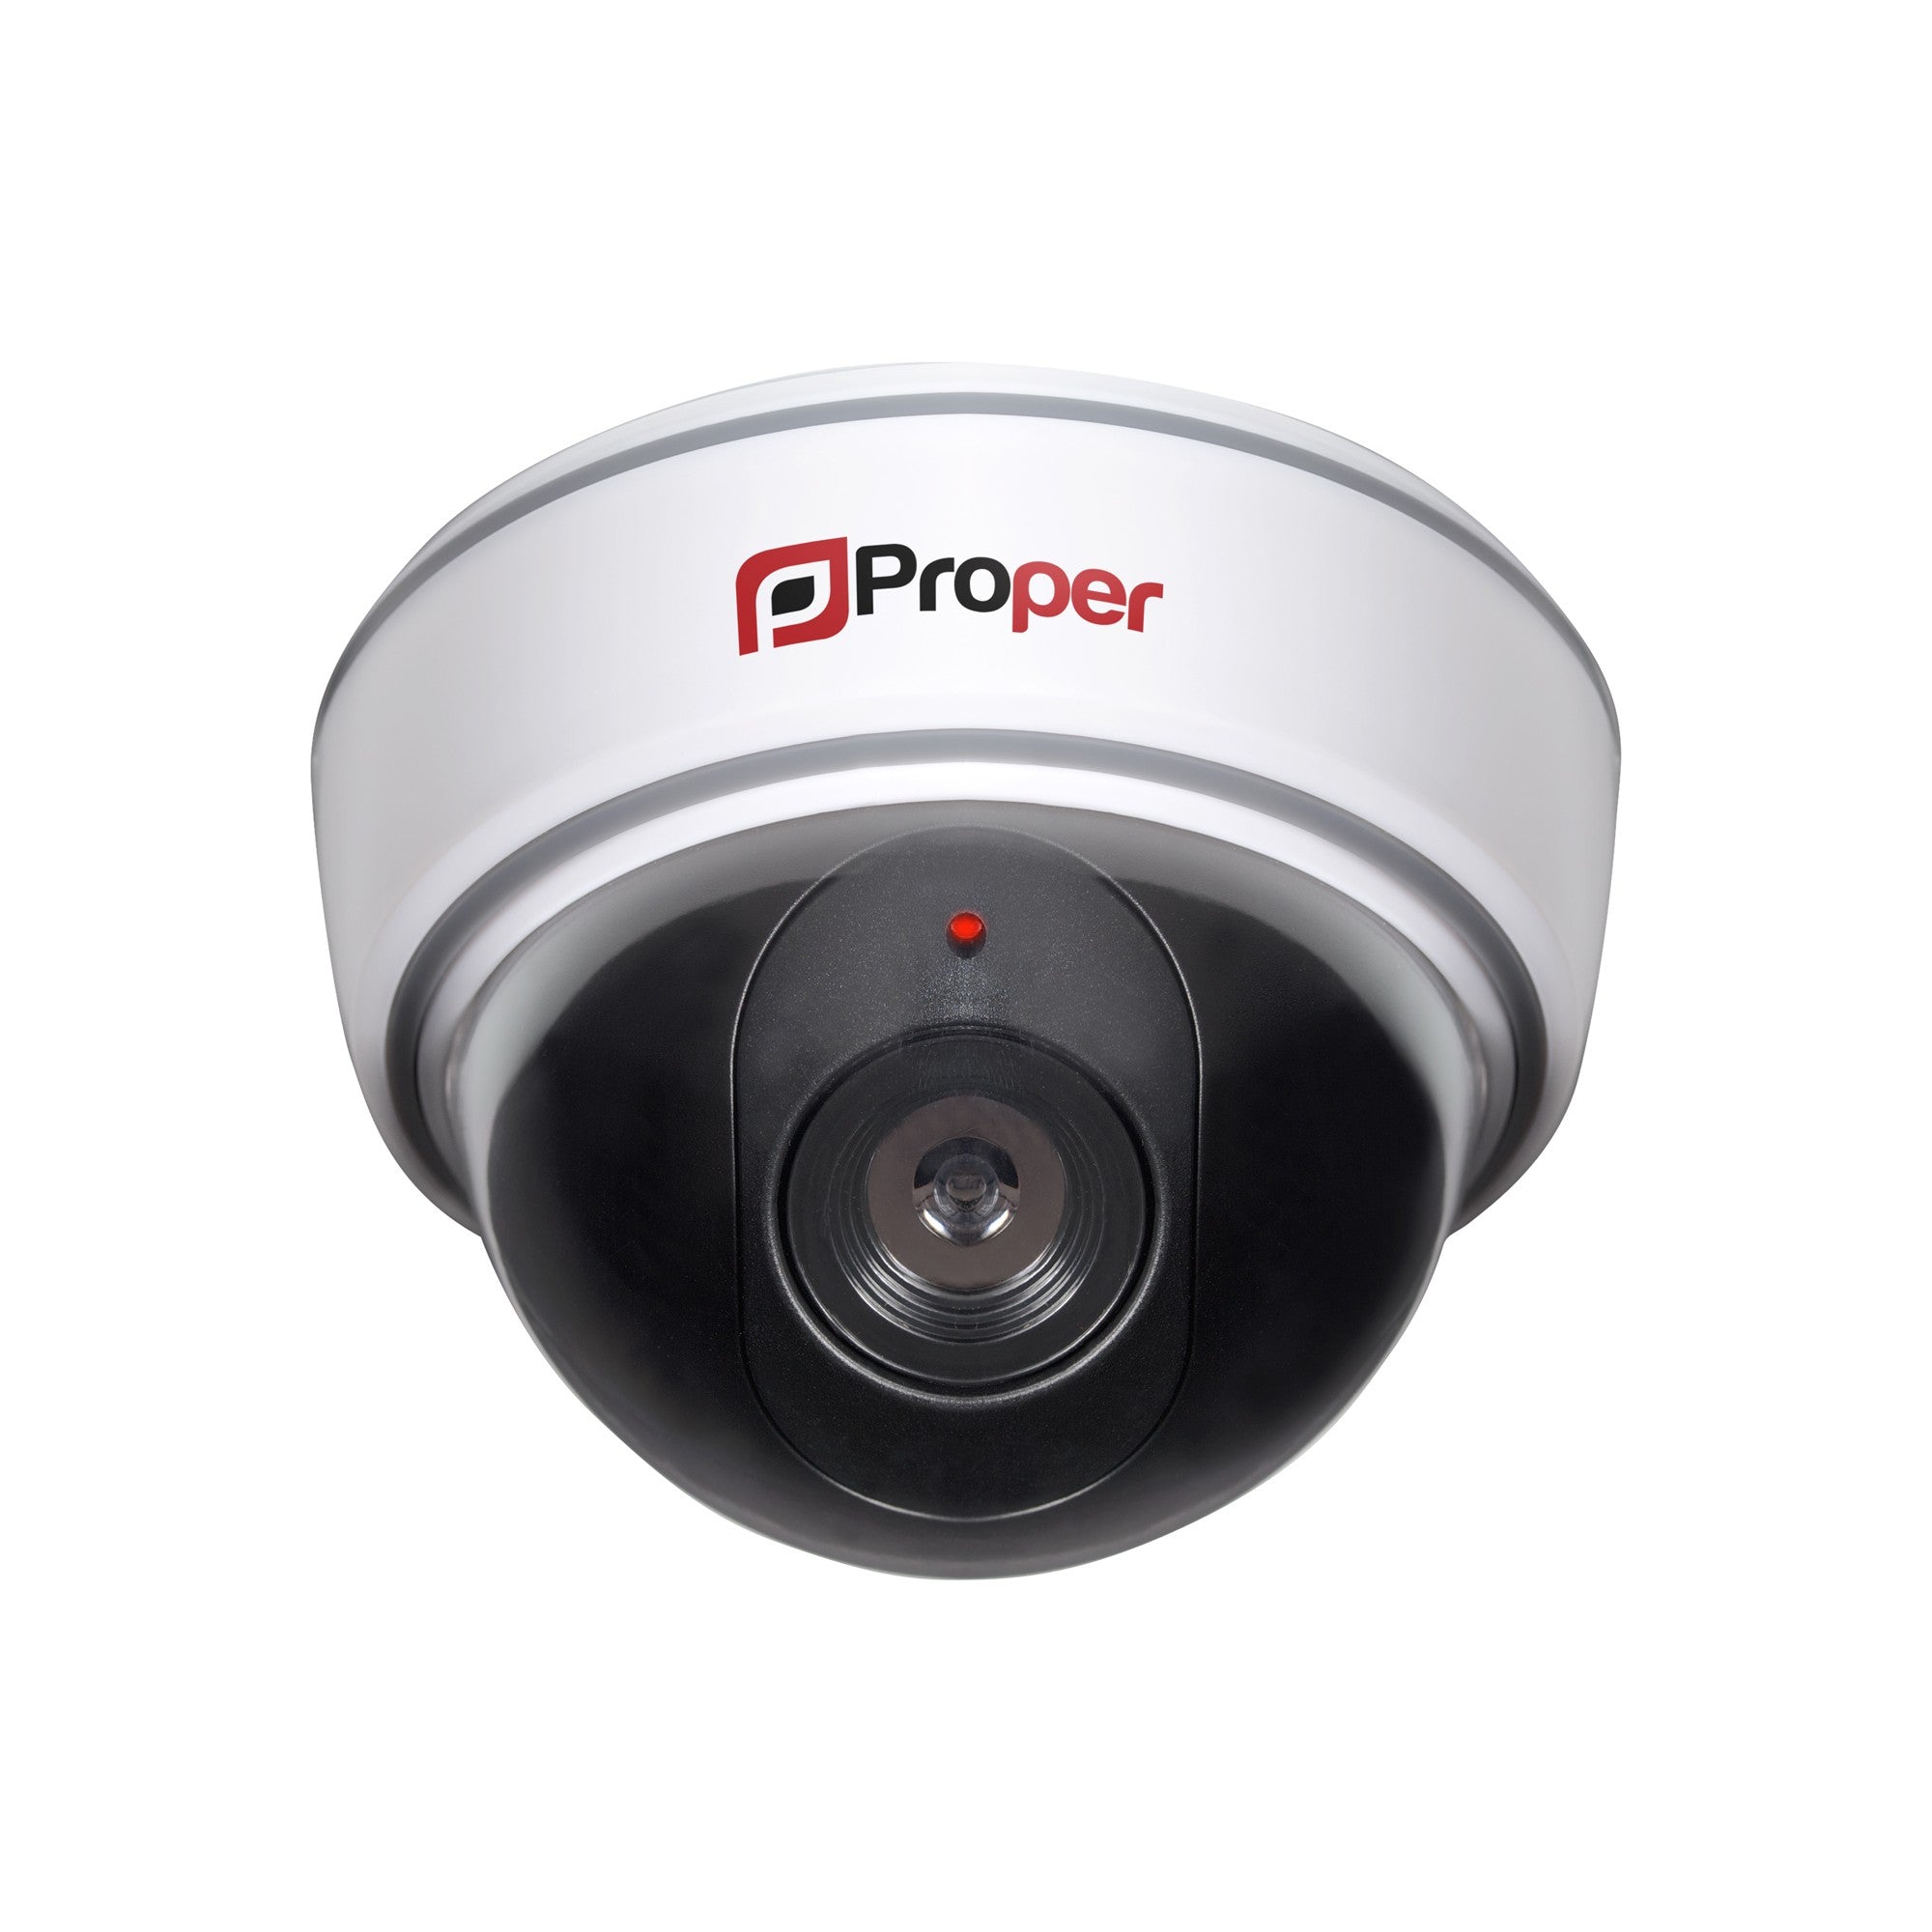 ProperAV Speed Dome Imitation Dummy Security Camera - Black & White